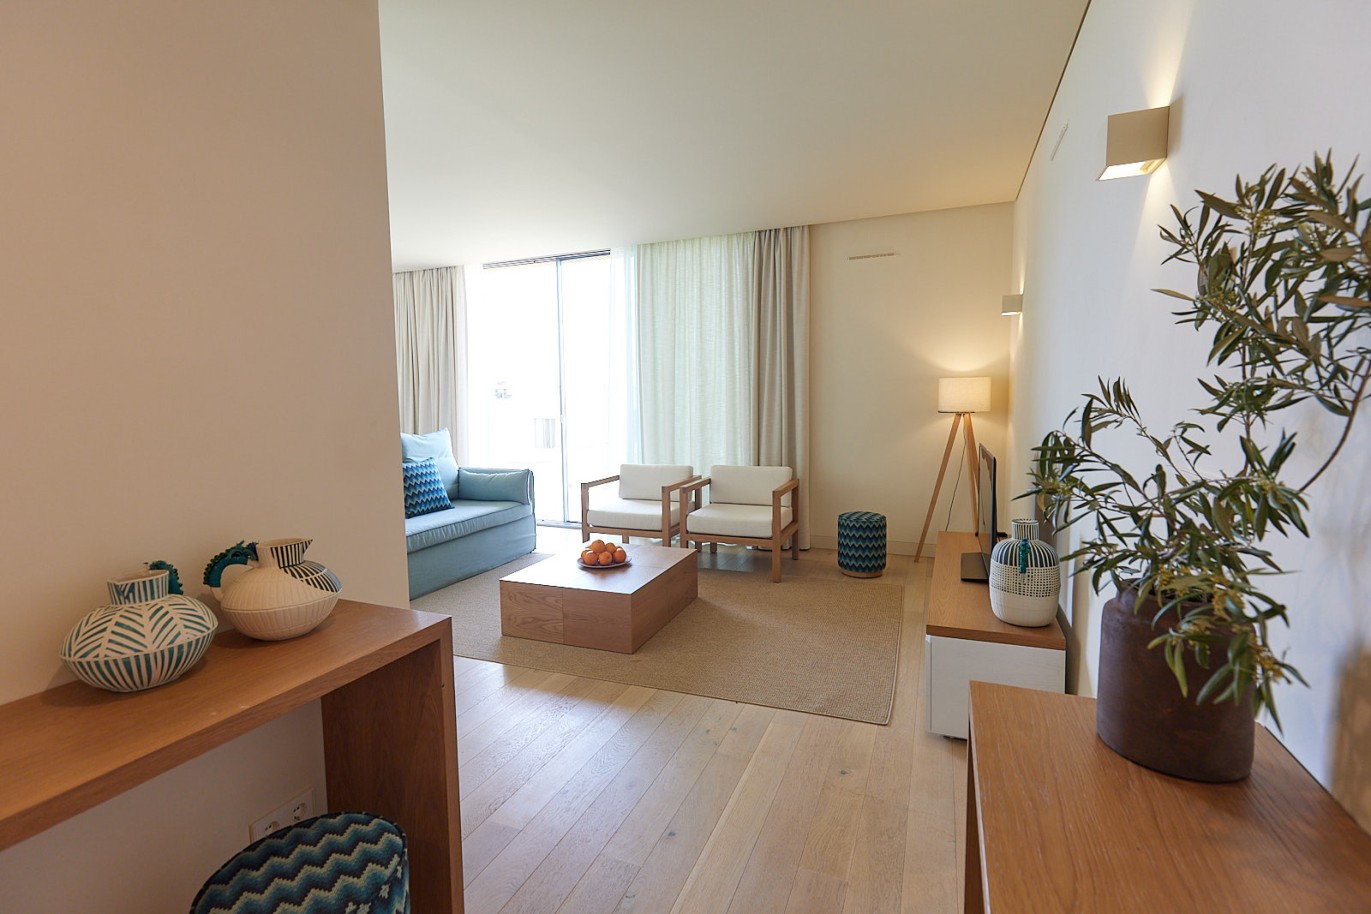 2 bedroom apartment in resort, for sale in Porches, Algarve_229192